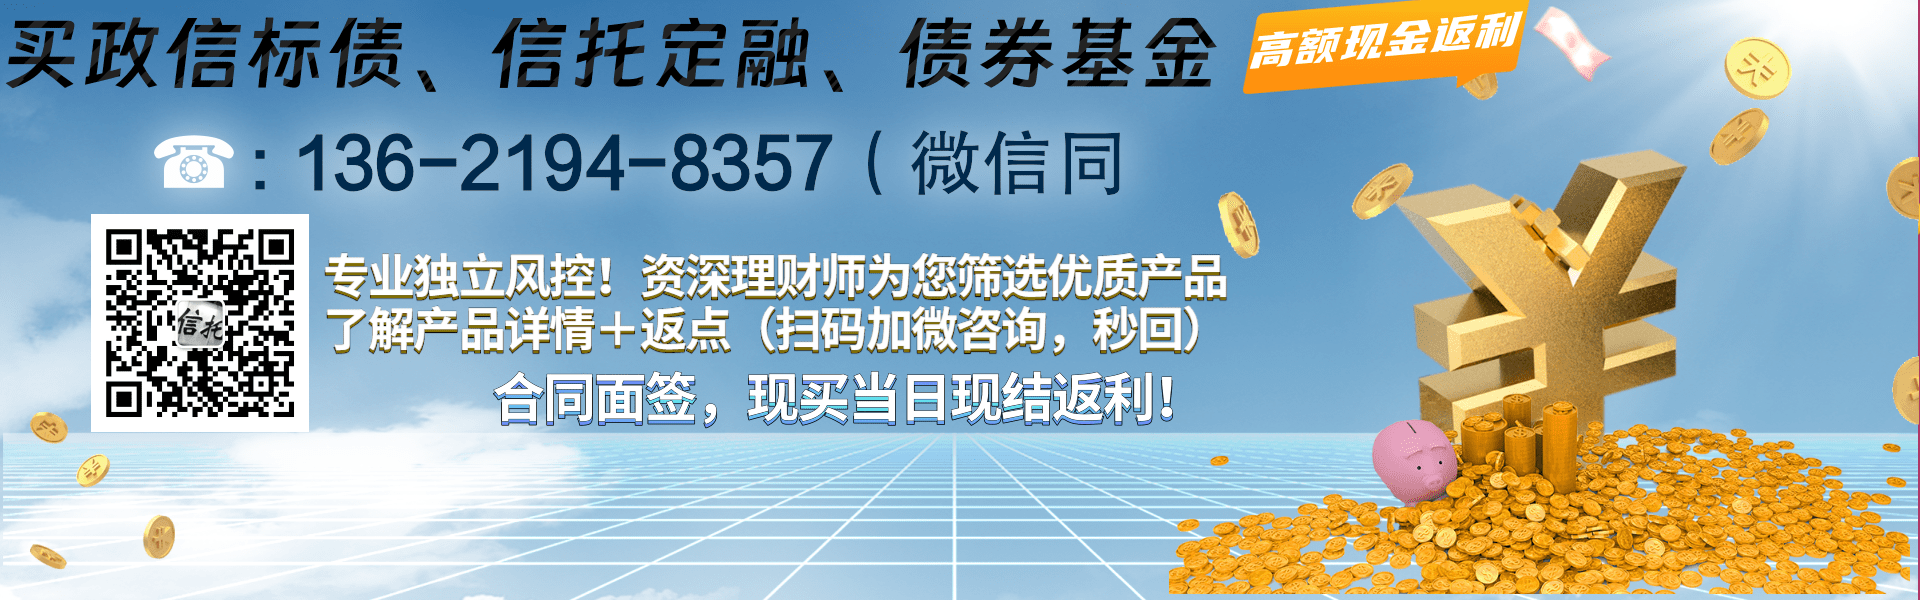 SD泰丰控股2023年债权系列项目